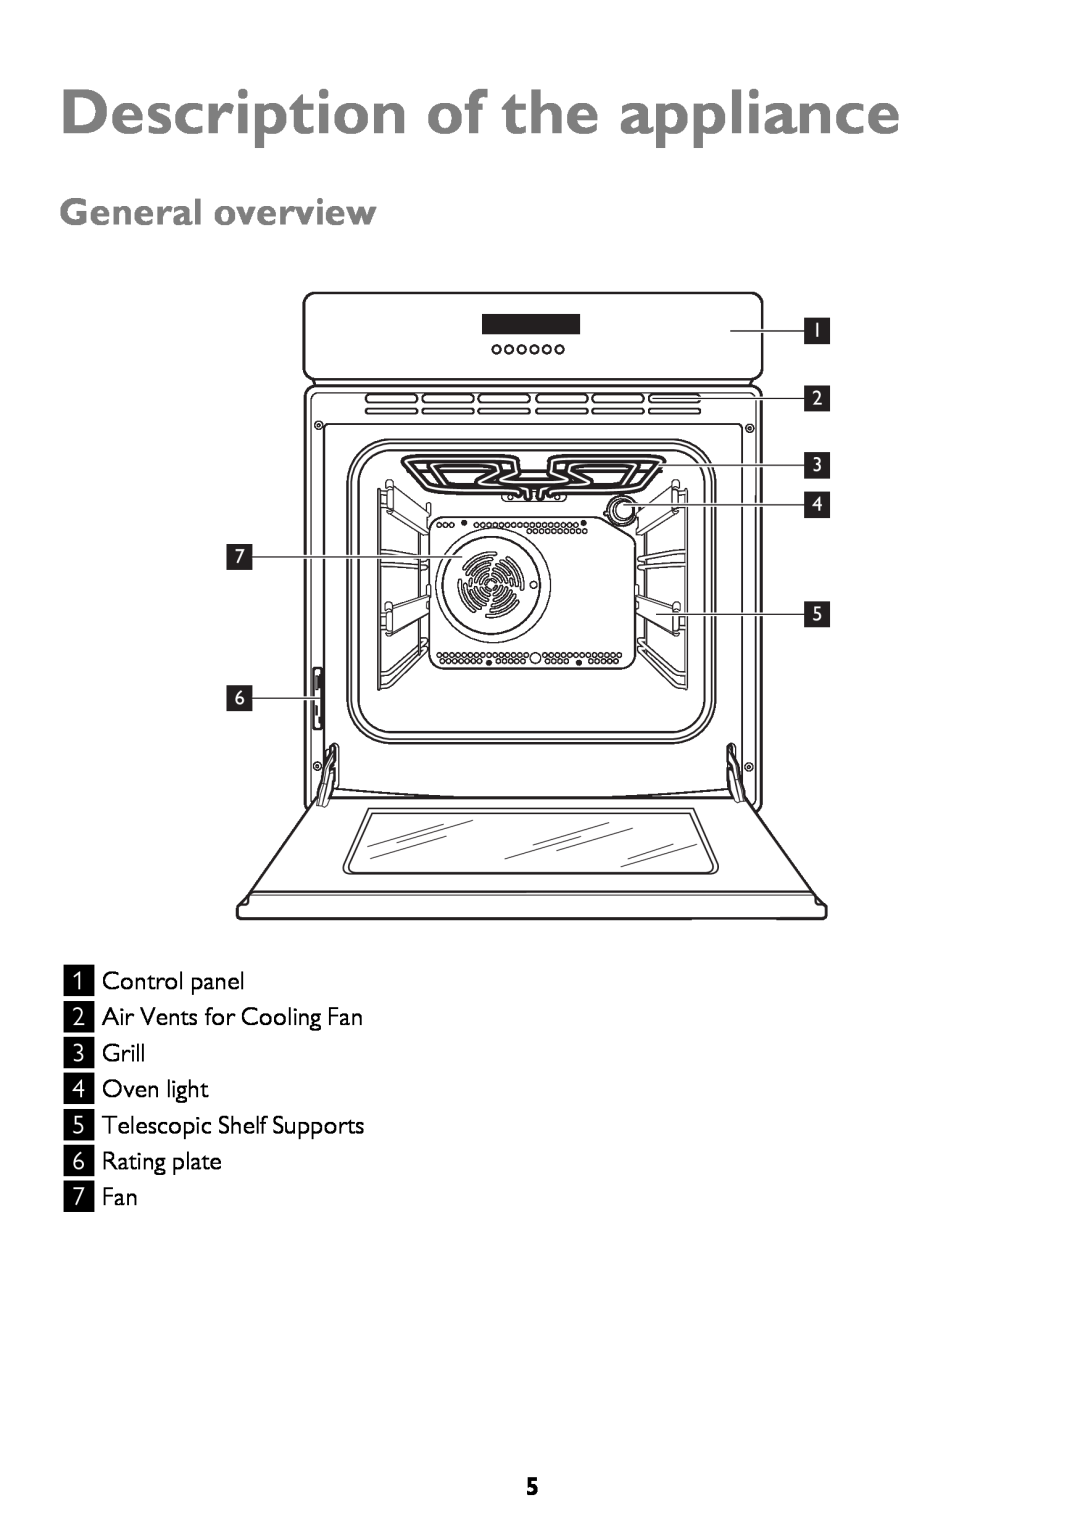 John Lewis JLBIOS662 instruction manual Description of the appliance, General overview 